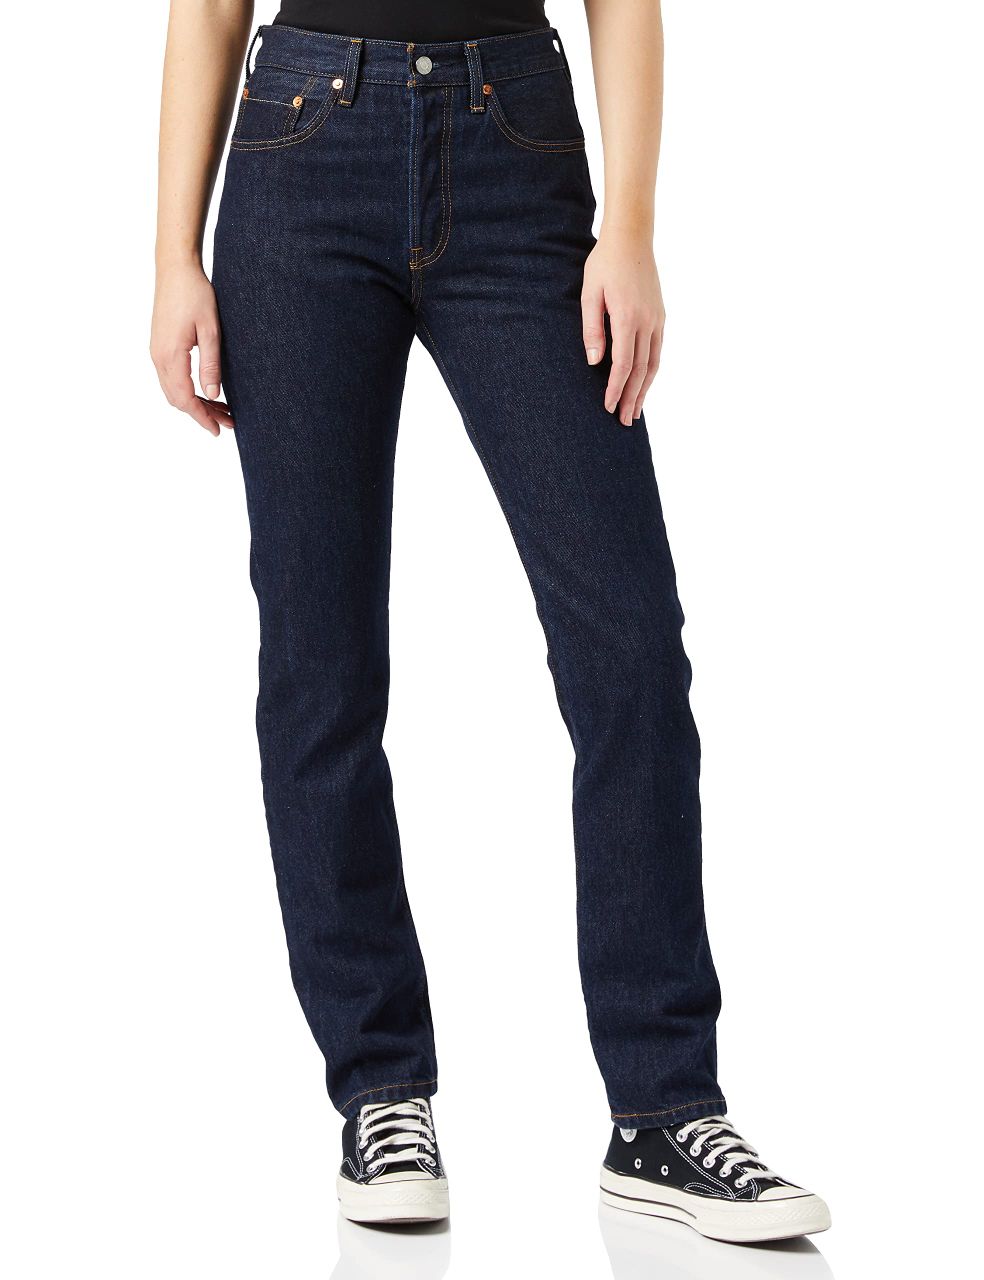 Джинсы женские Levi's 501 Jeans For Women Deep Breath Jeans синие 42-44